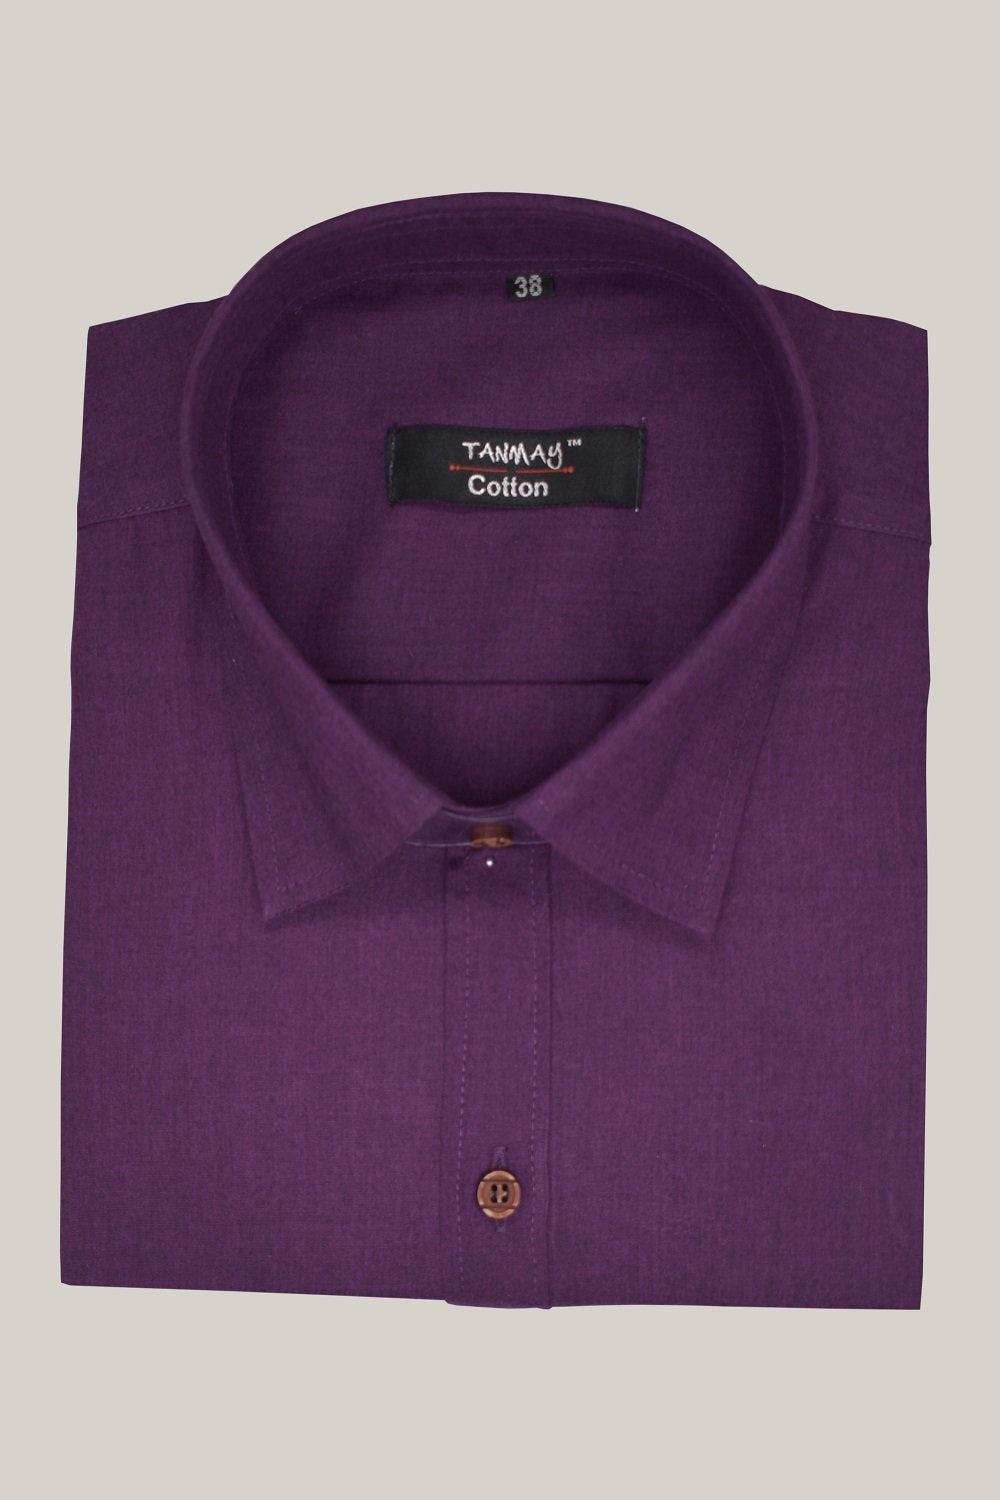 Cotton Tanmay Satin Dark Purple Color Full Sleeves Formal Shirt for Men's